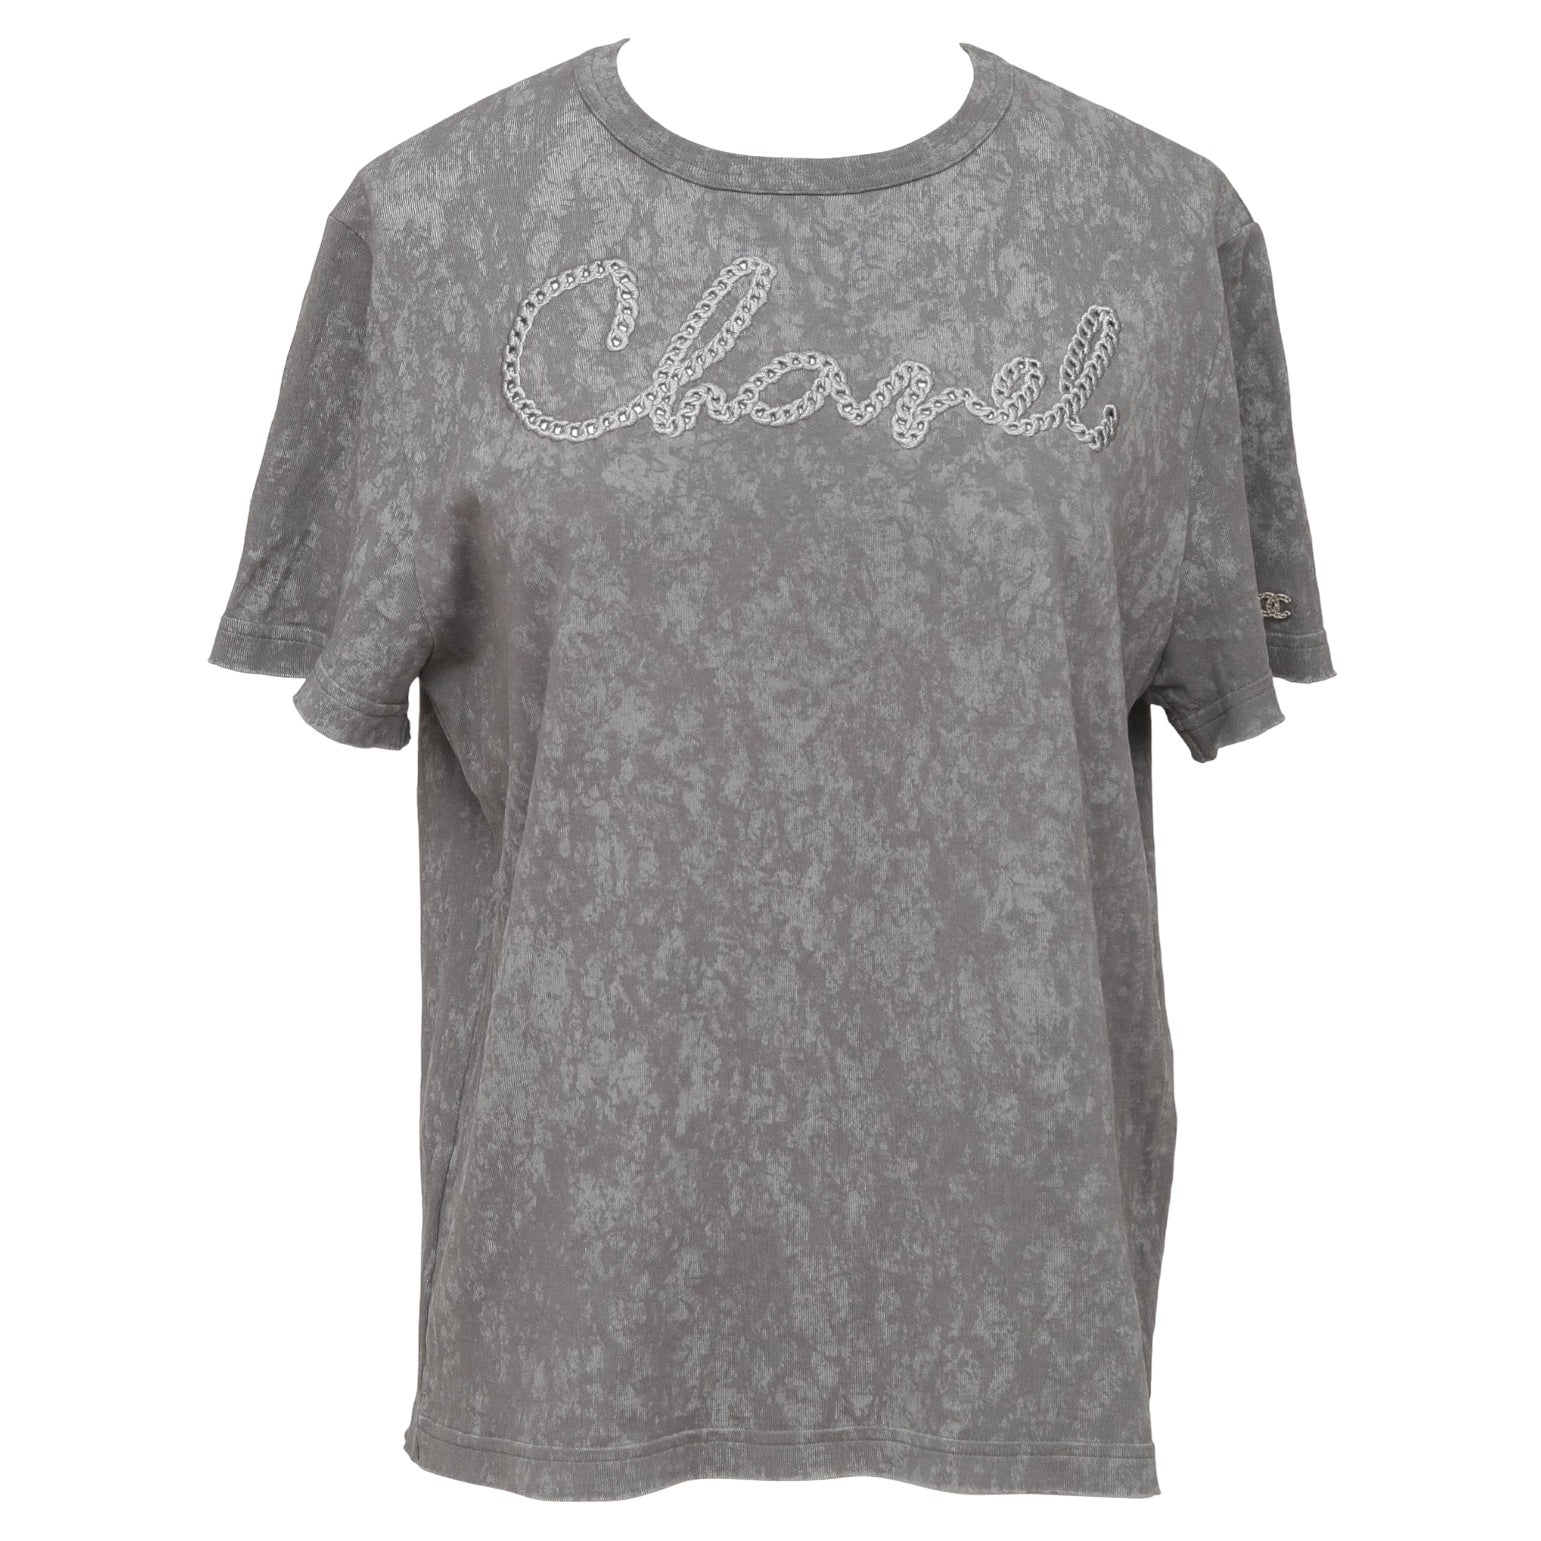 CHANEL Grey T-Shirt Top Shirt Short Sleeve Crew Neck Tie-Dye 34/36 2020